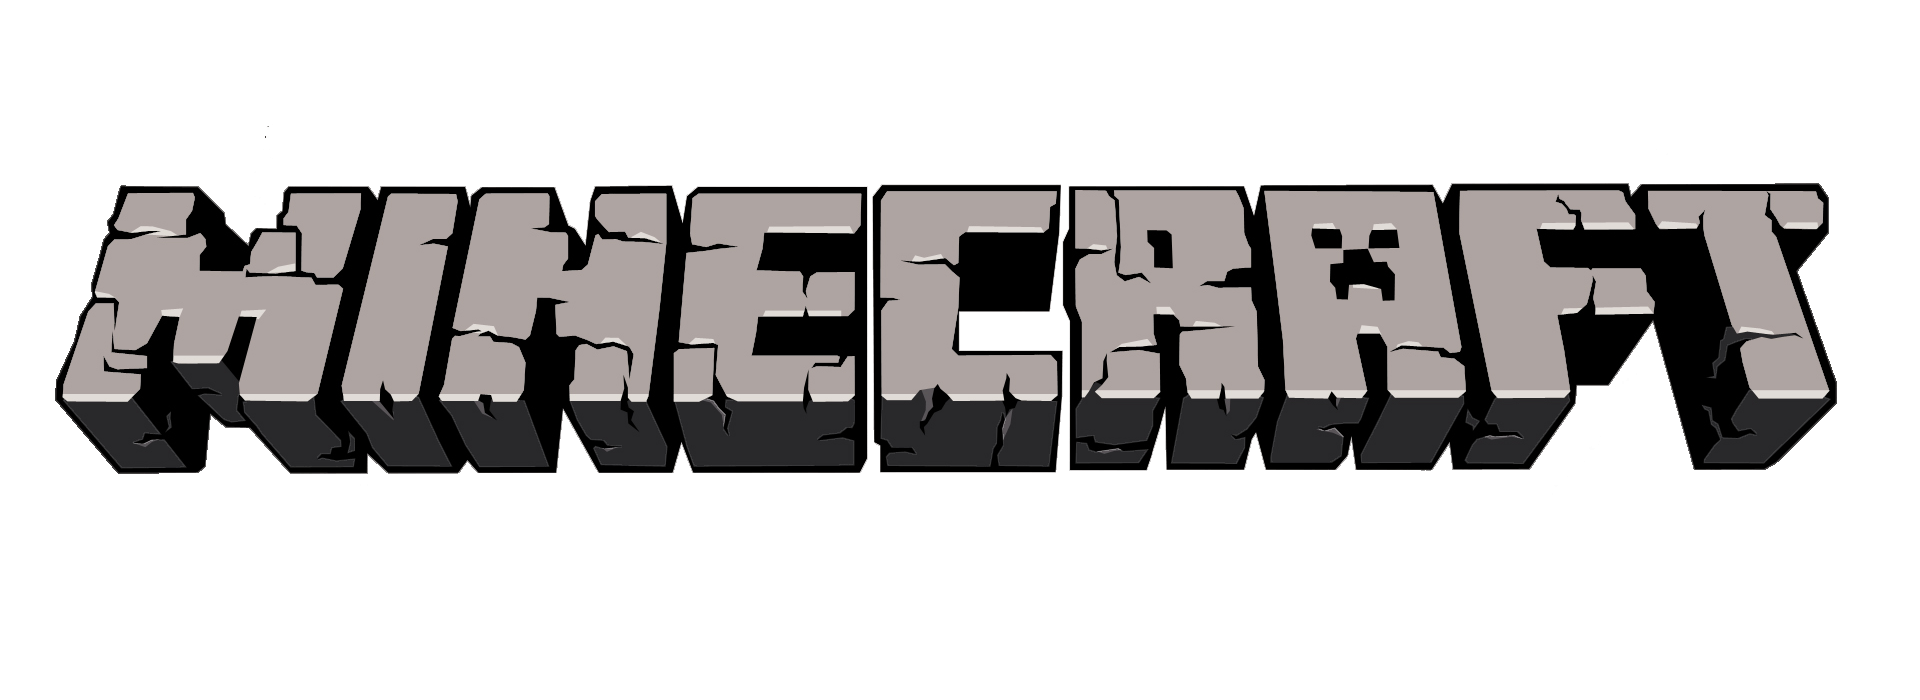 minecraft-logo-transparent-background-ut05tirq.